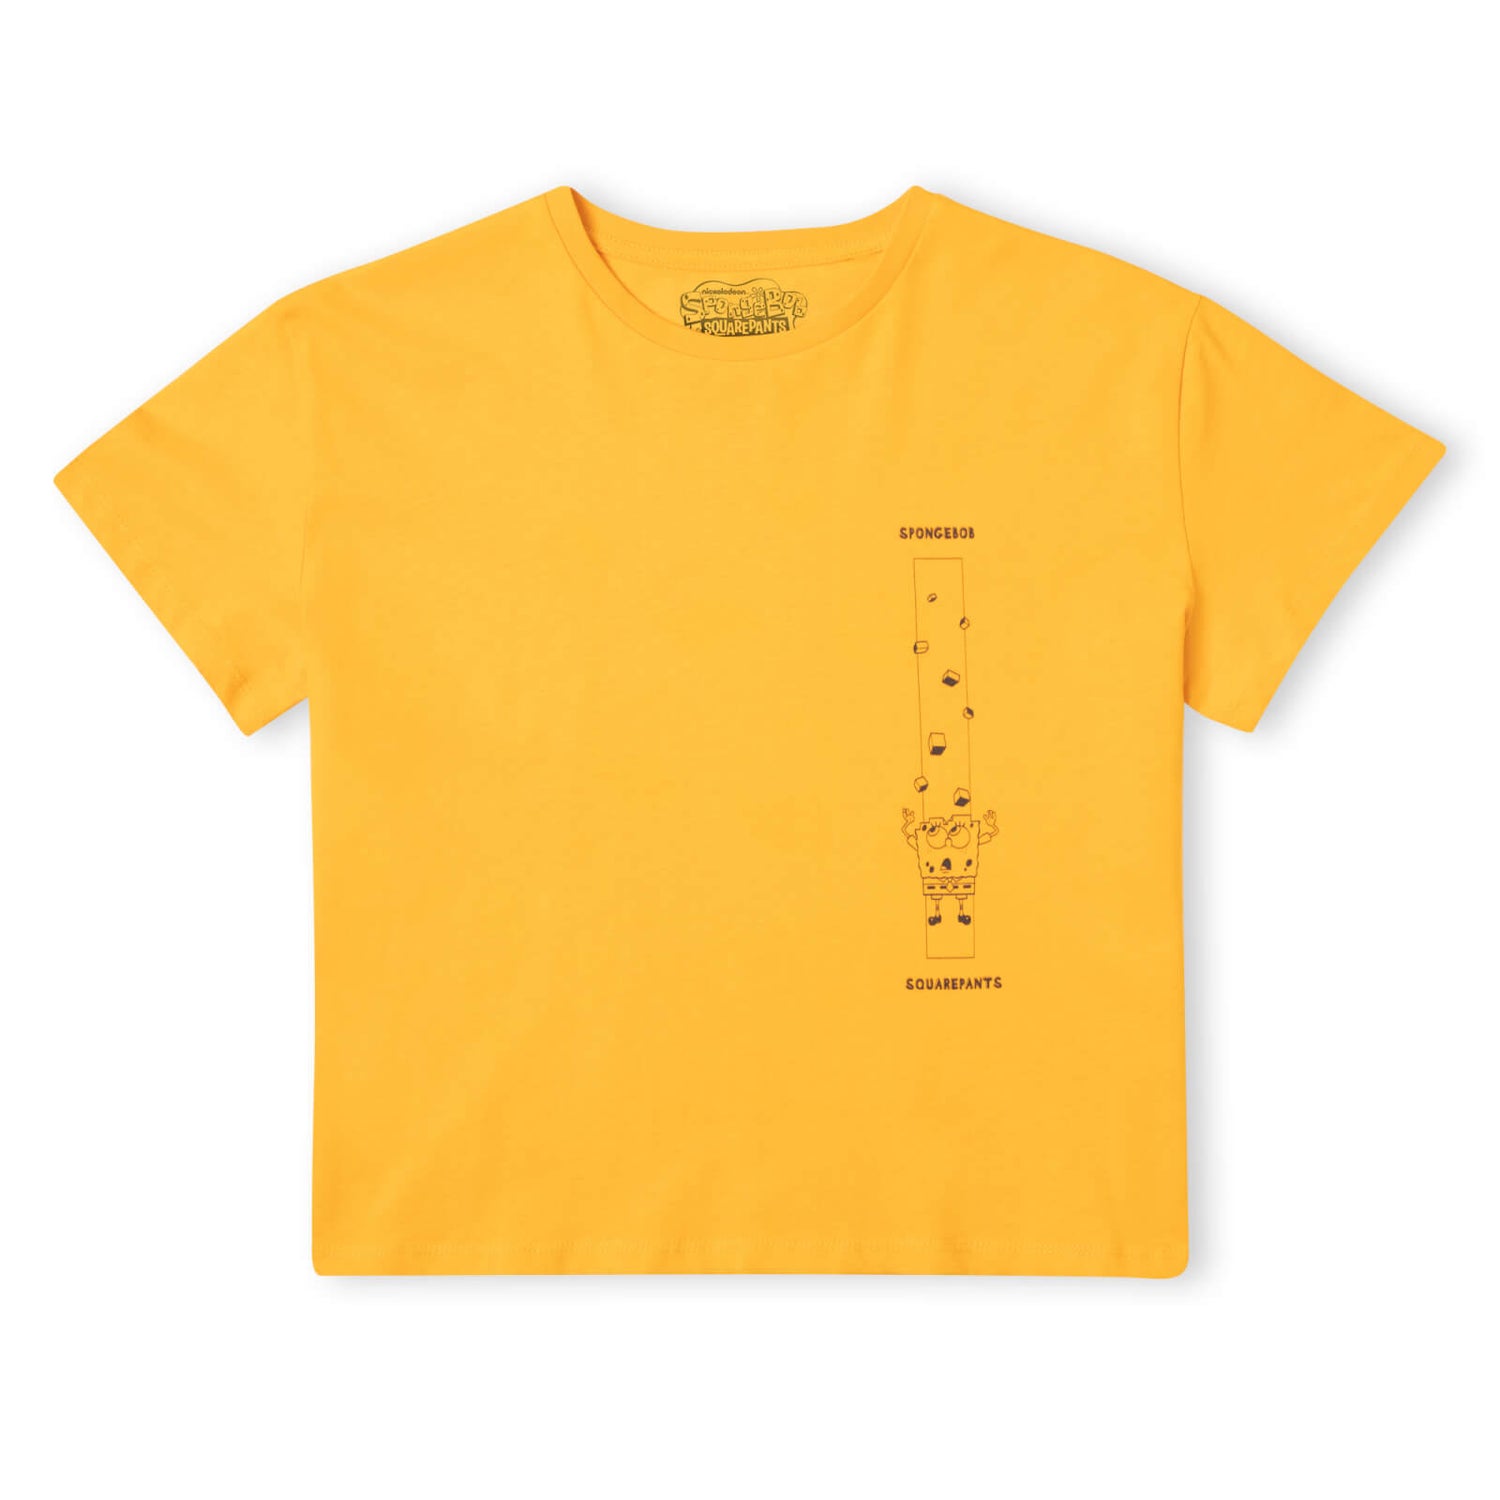 Spongebob Squarepants Fragmented Spongebob Women's Cropped T-Shirt - Mustard